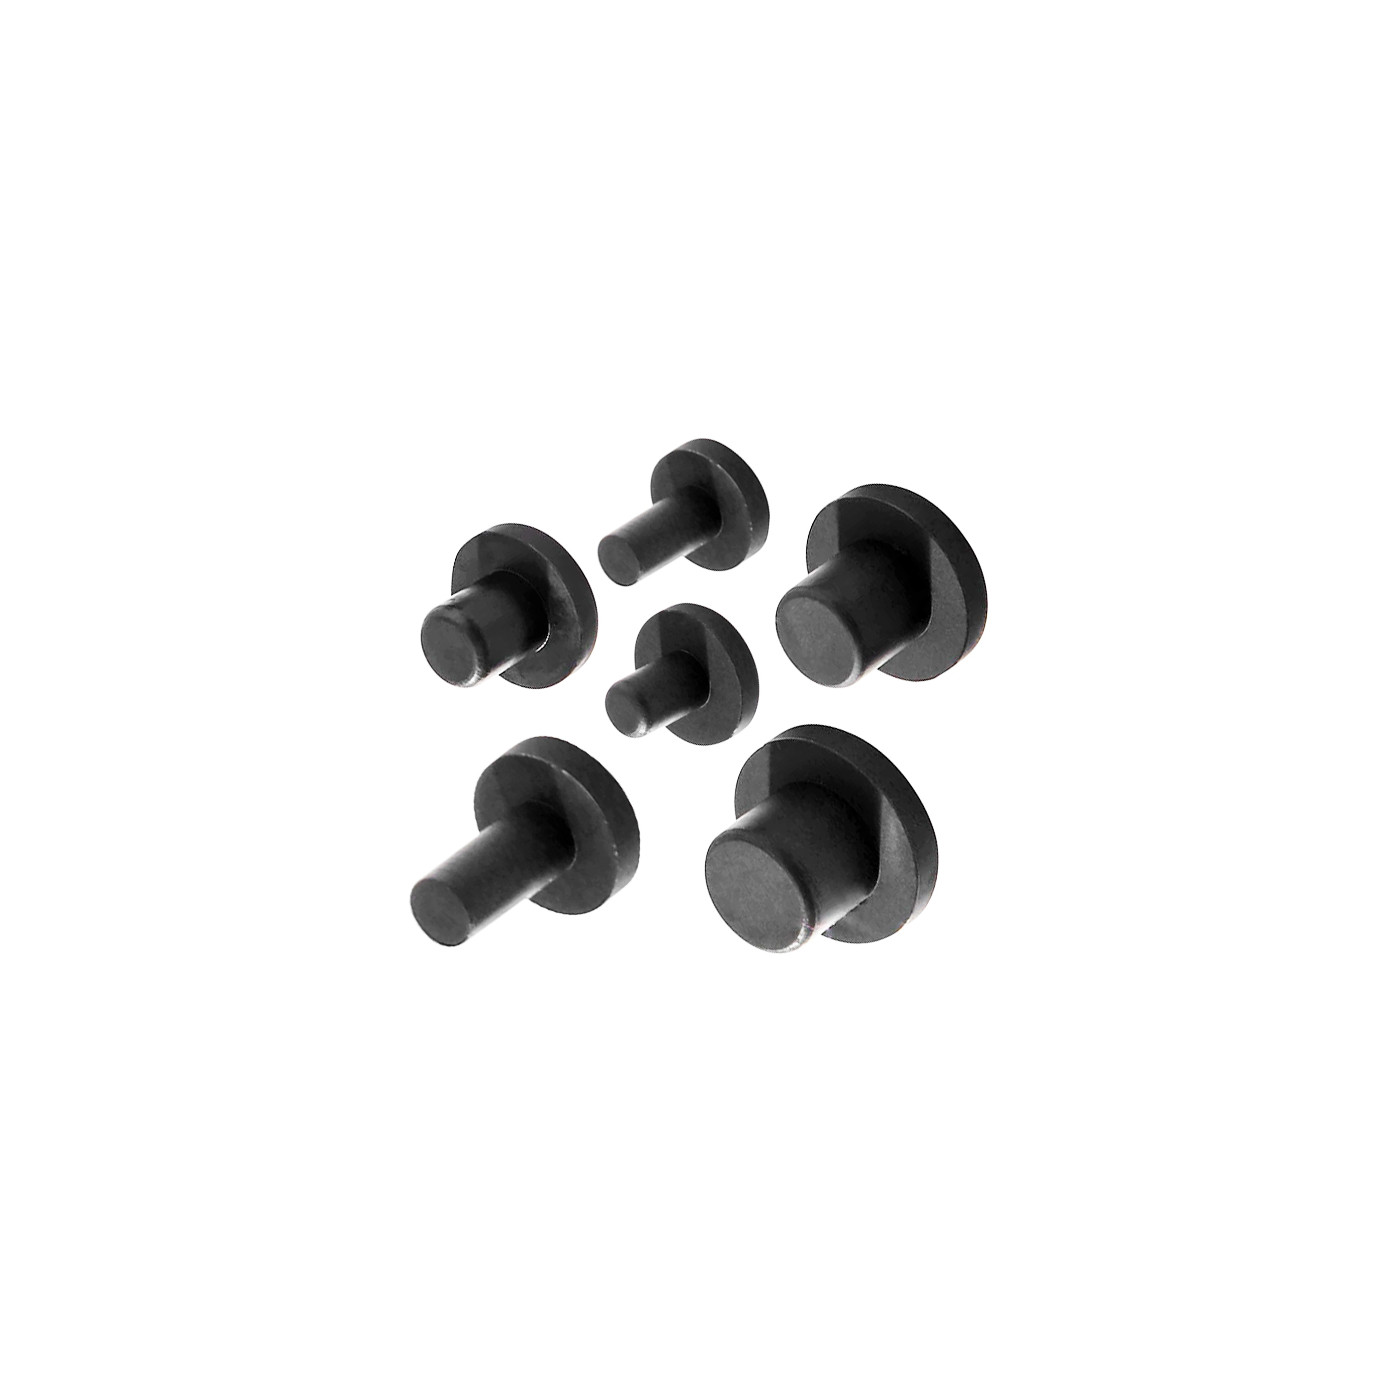 Prehistorisch Mew Mew Post Set van 100 kleine rubber pluggen (intern, rond, 4.4 mm, zwart)  [I-RO-4.4-B-R] - Caps and Buffers B.V.